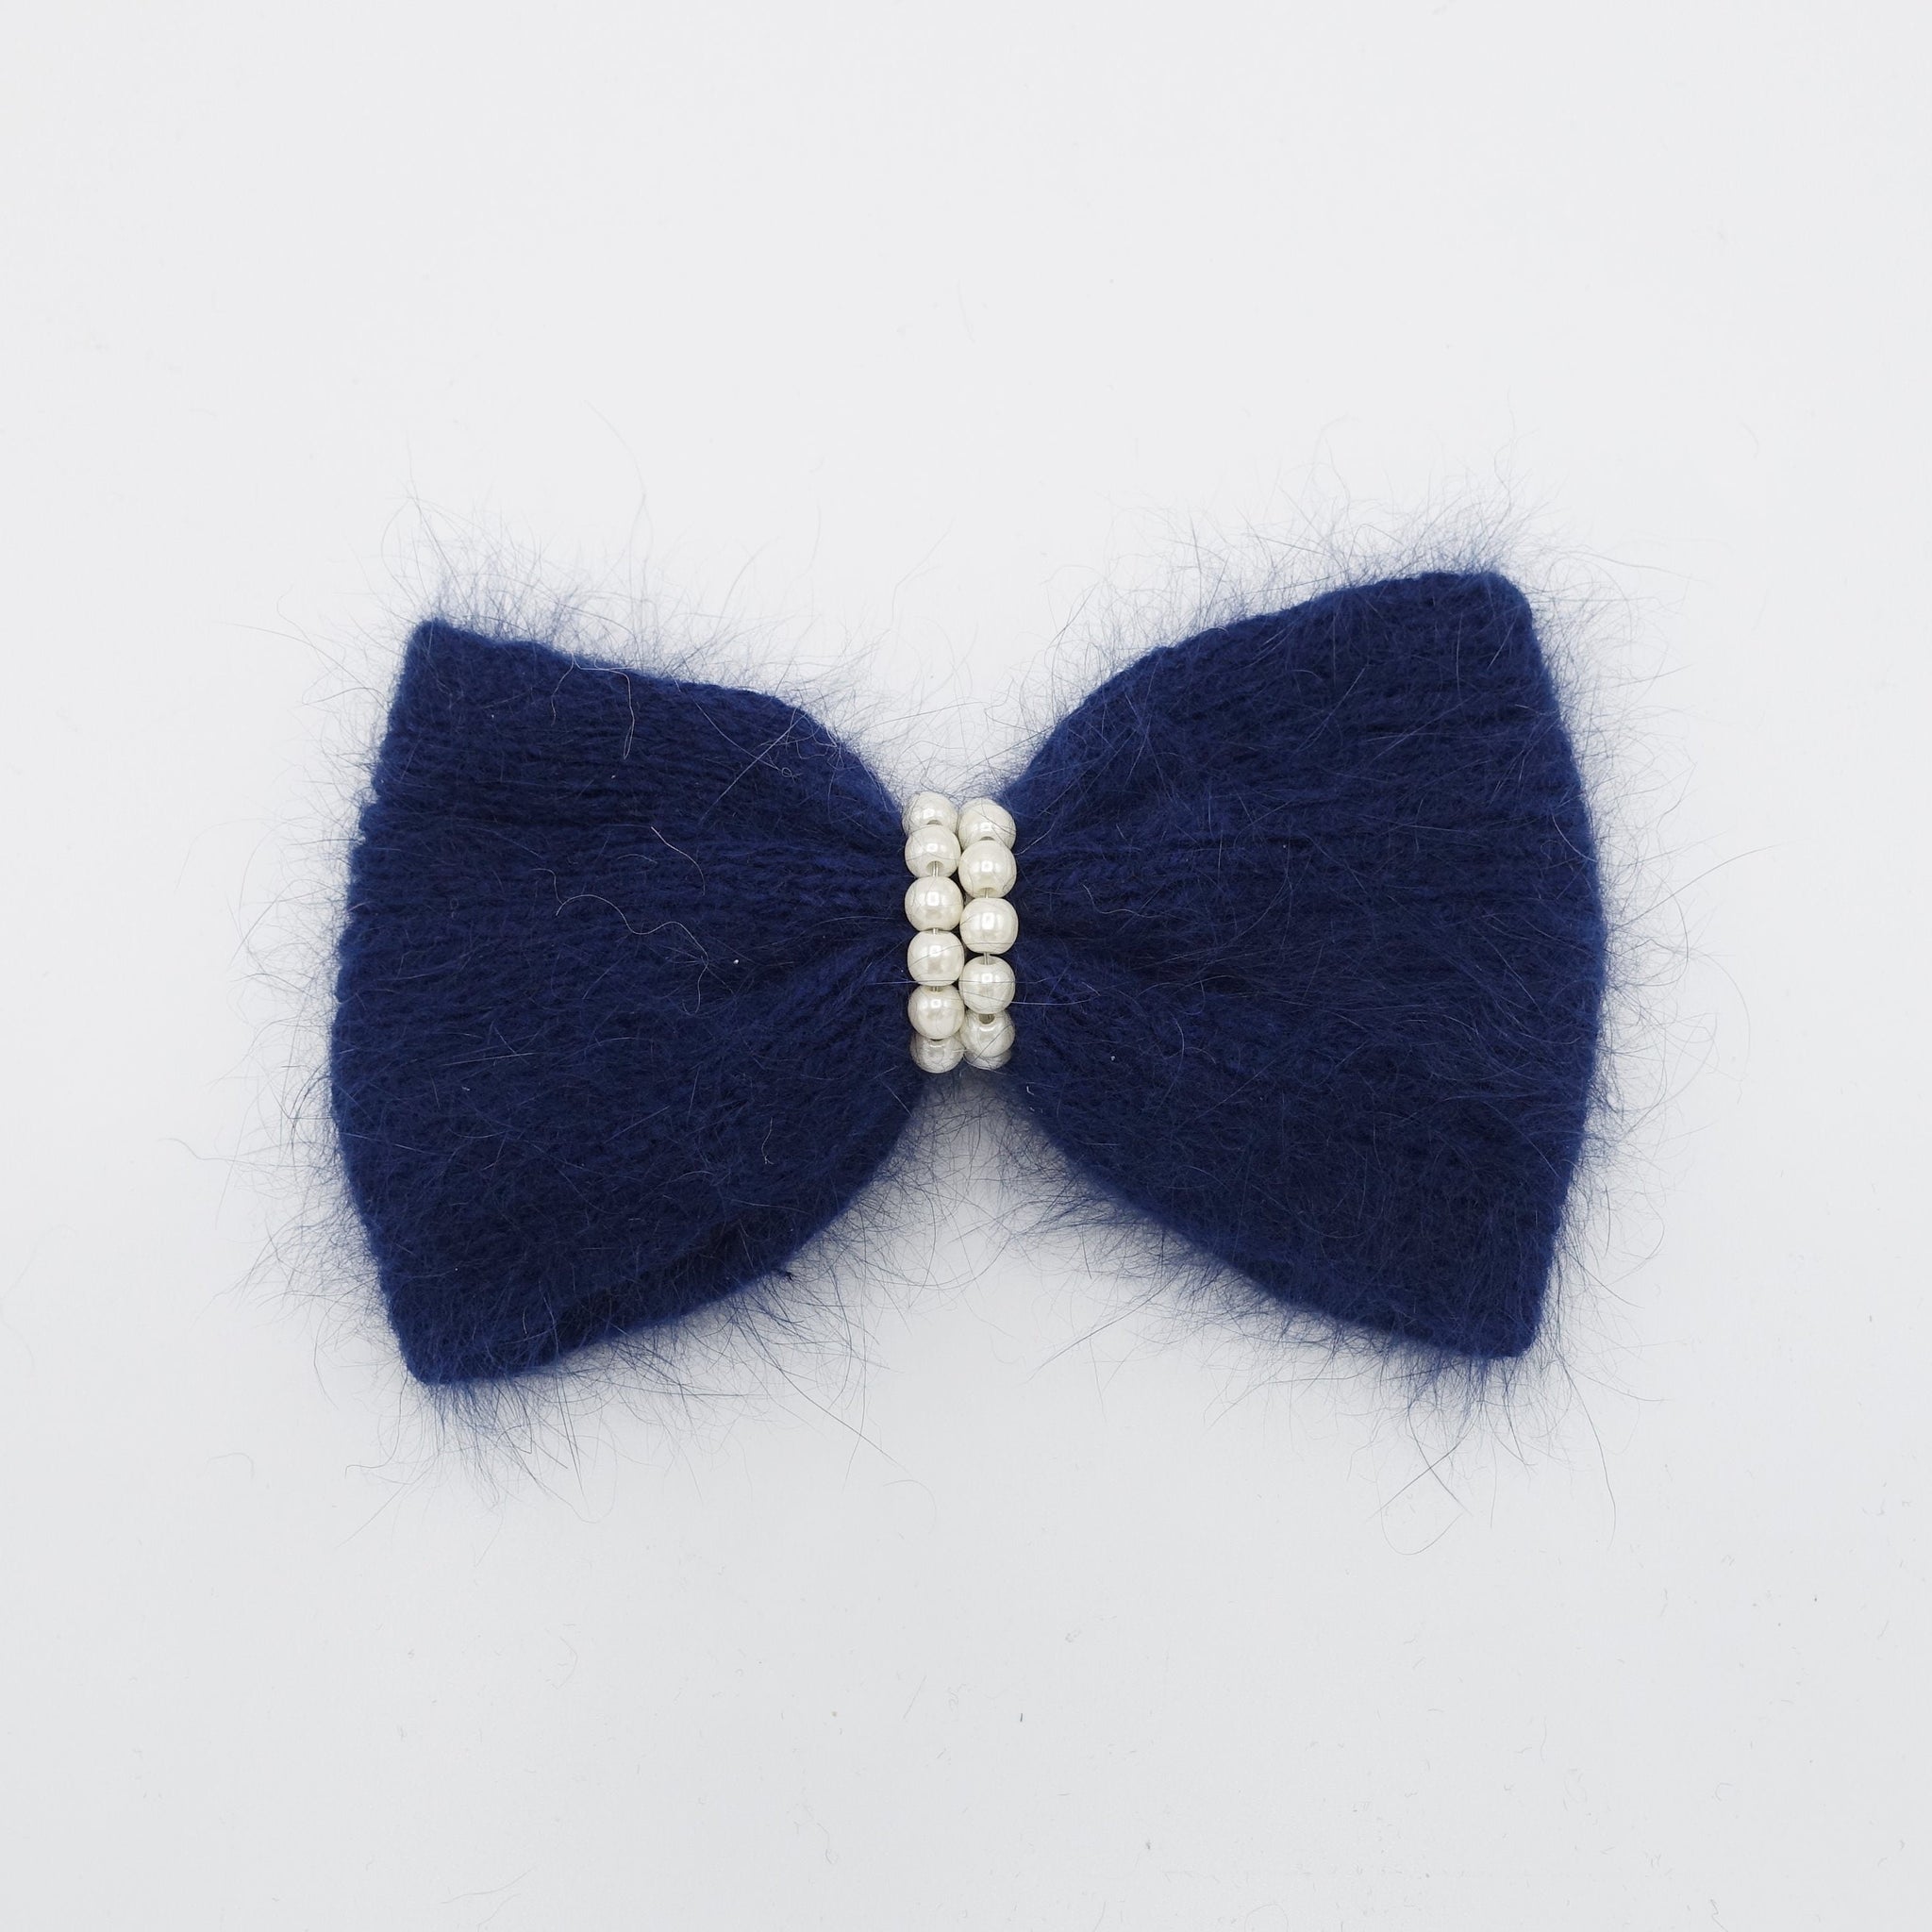 veryshine.com Barrette (Bow) Navy angora hair bow pearl embellished Fall Winter women hair barrette